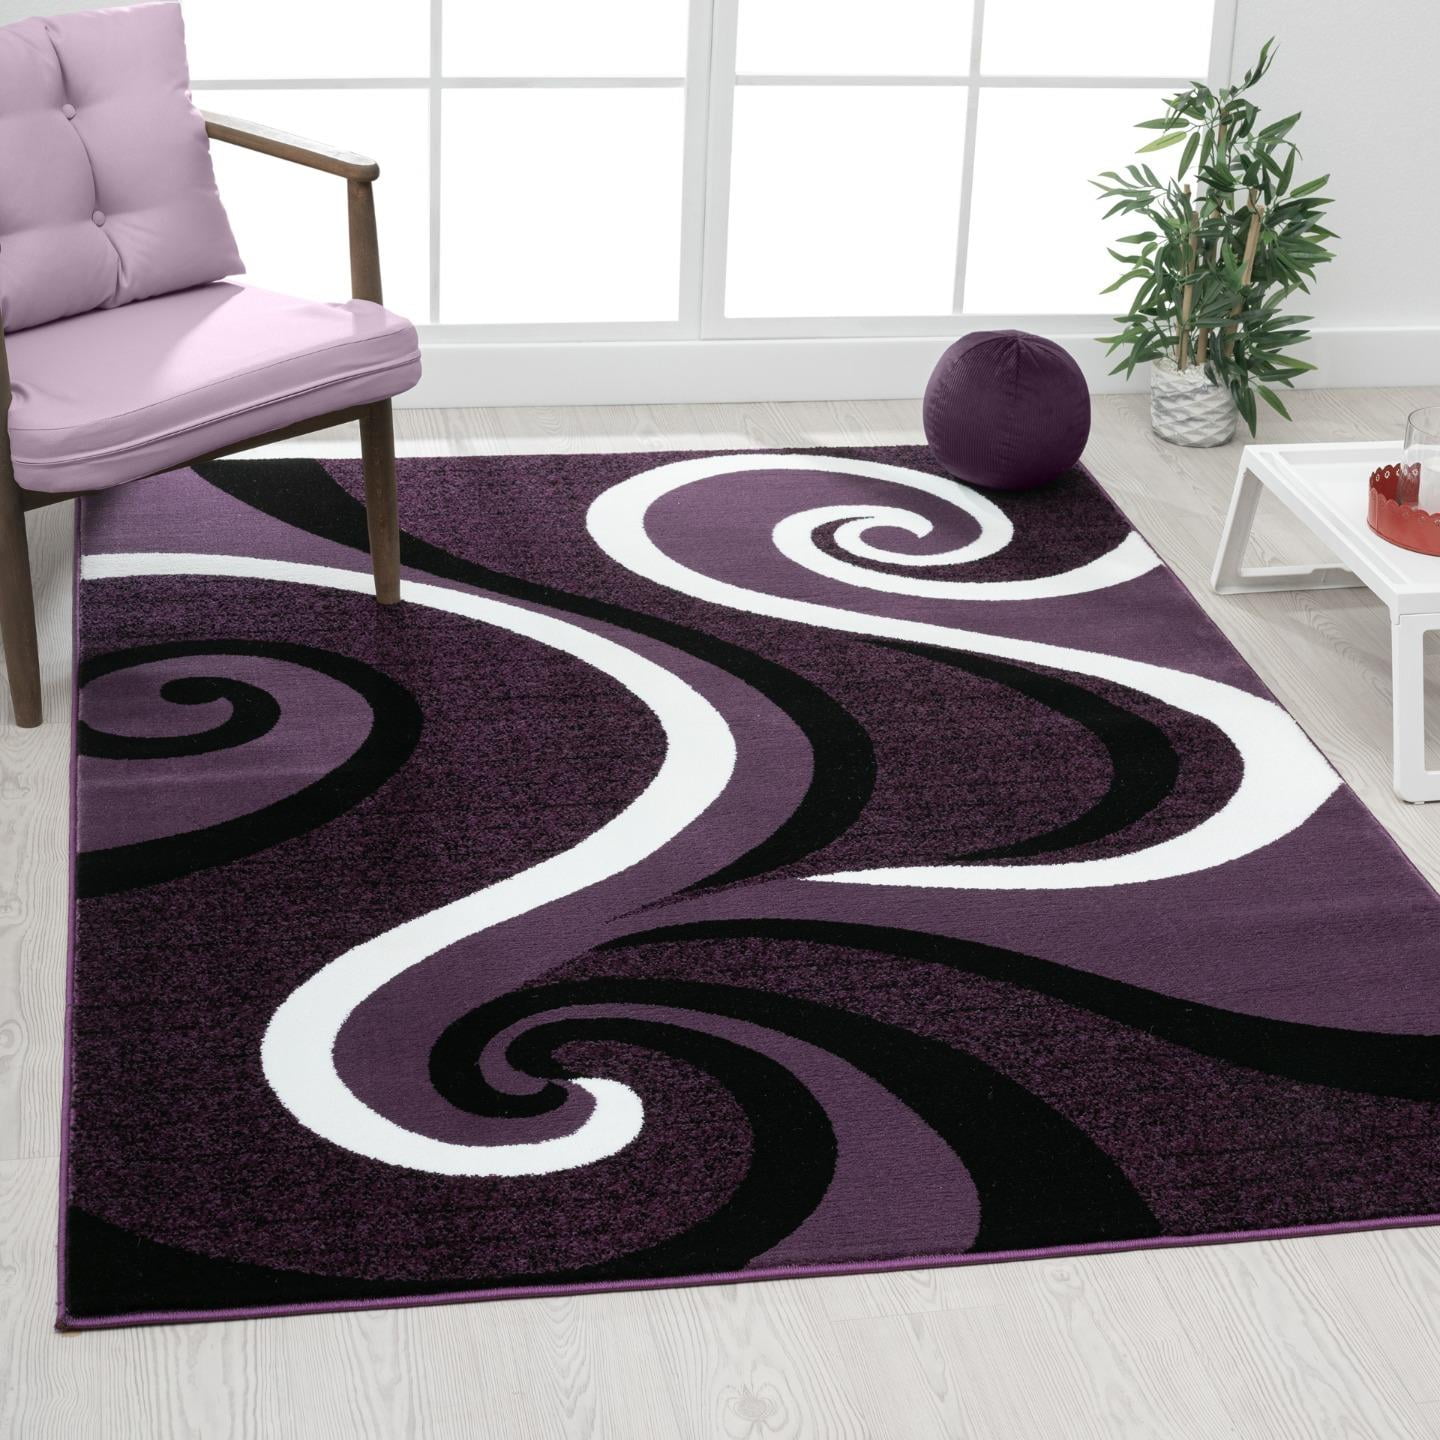 Persian Rugs Purple Swirls Modern Abstract Area Rug 7x10 - Walmart.com